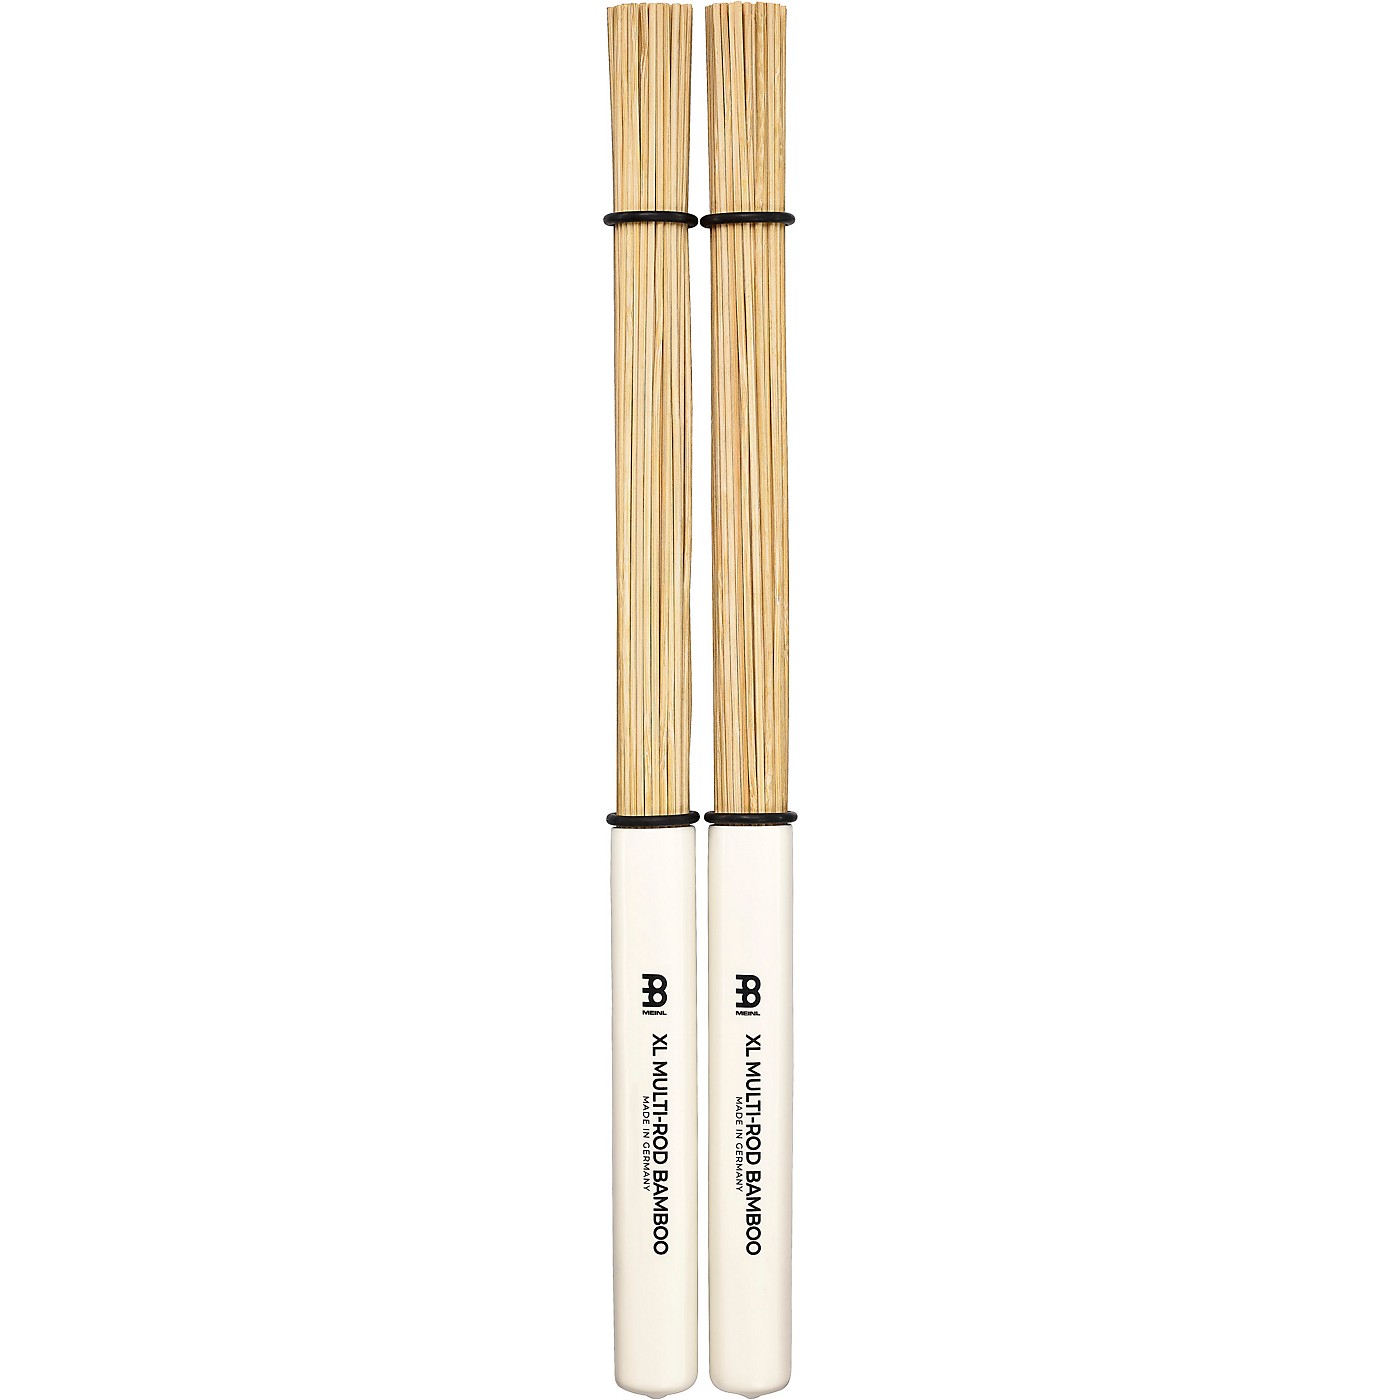 Meinl Stick & Brush Bamboo XL Multi-Rods thumbnail